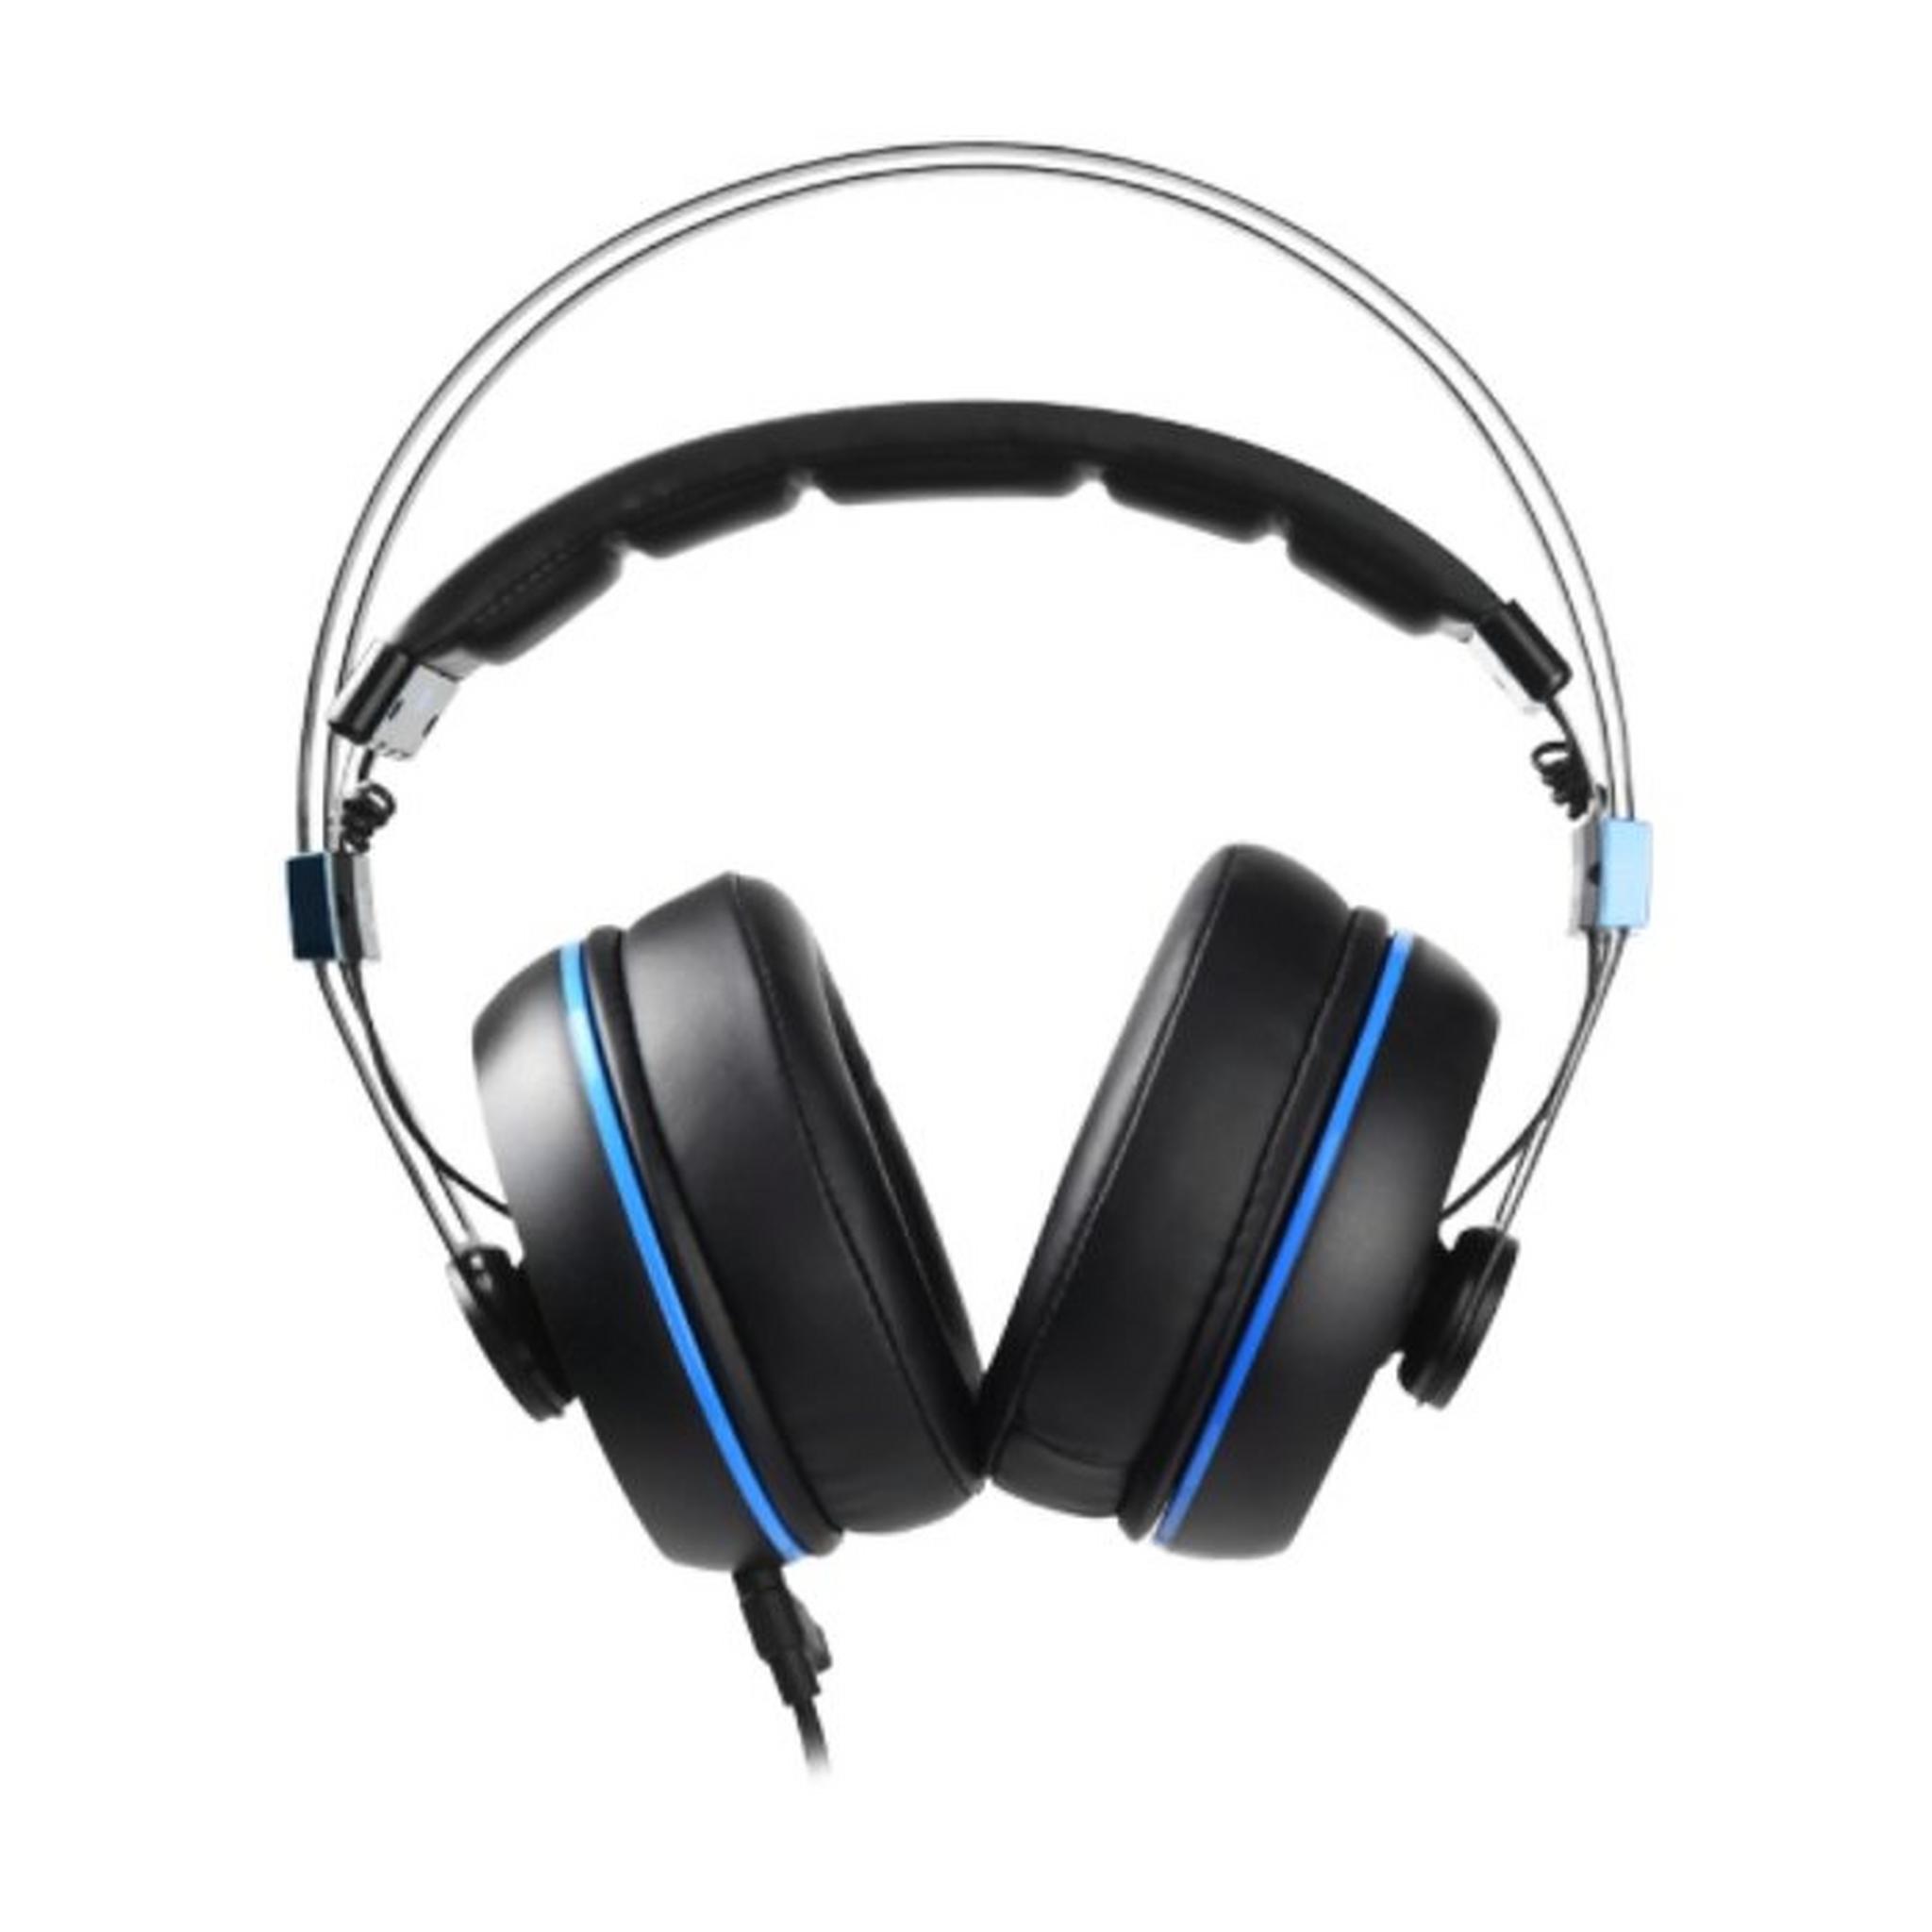 Sades Armor RGB Wired Gaming Headset - Black/Blue -SA-908